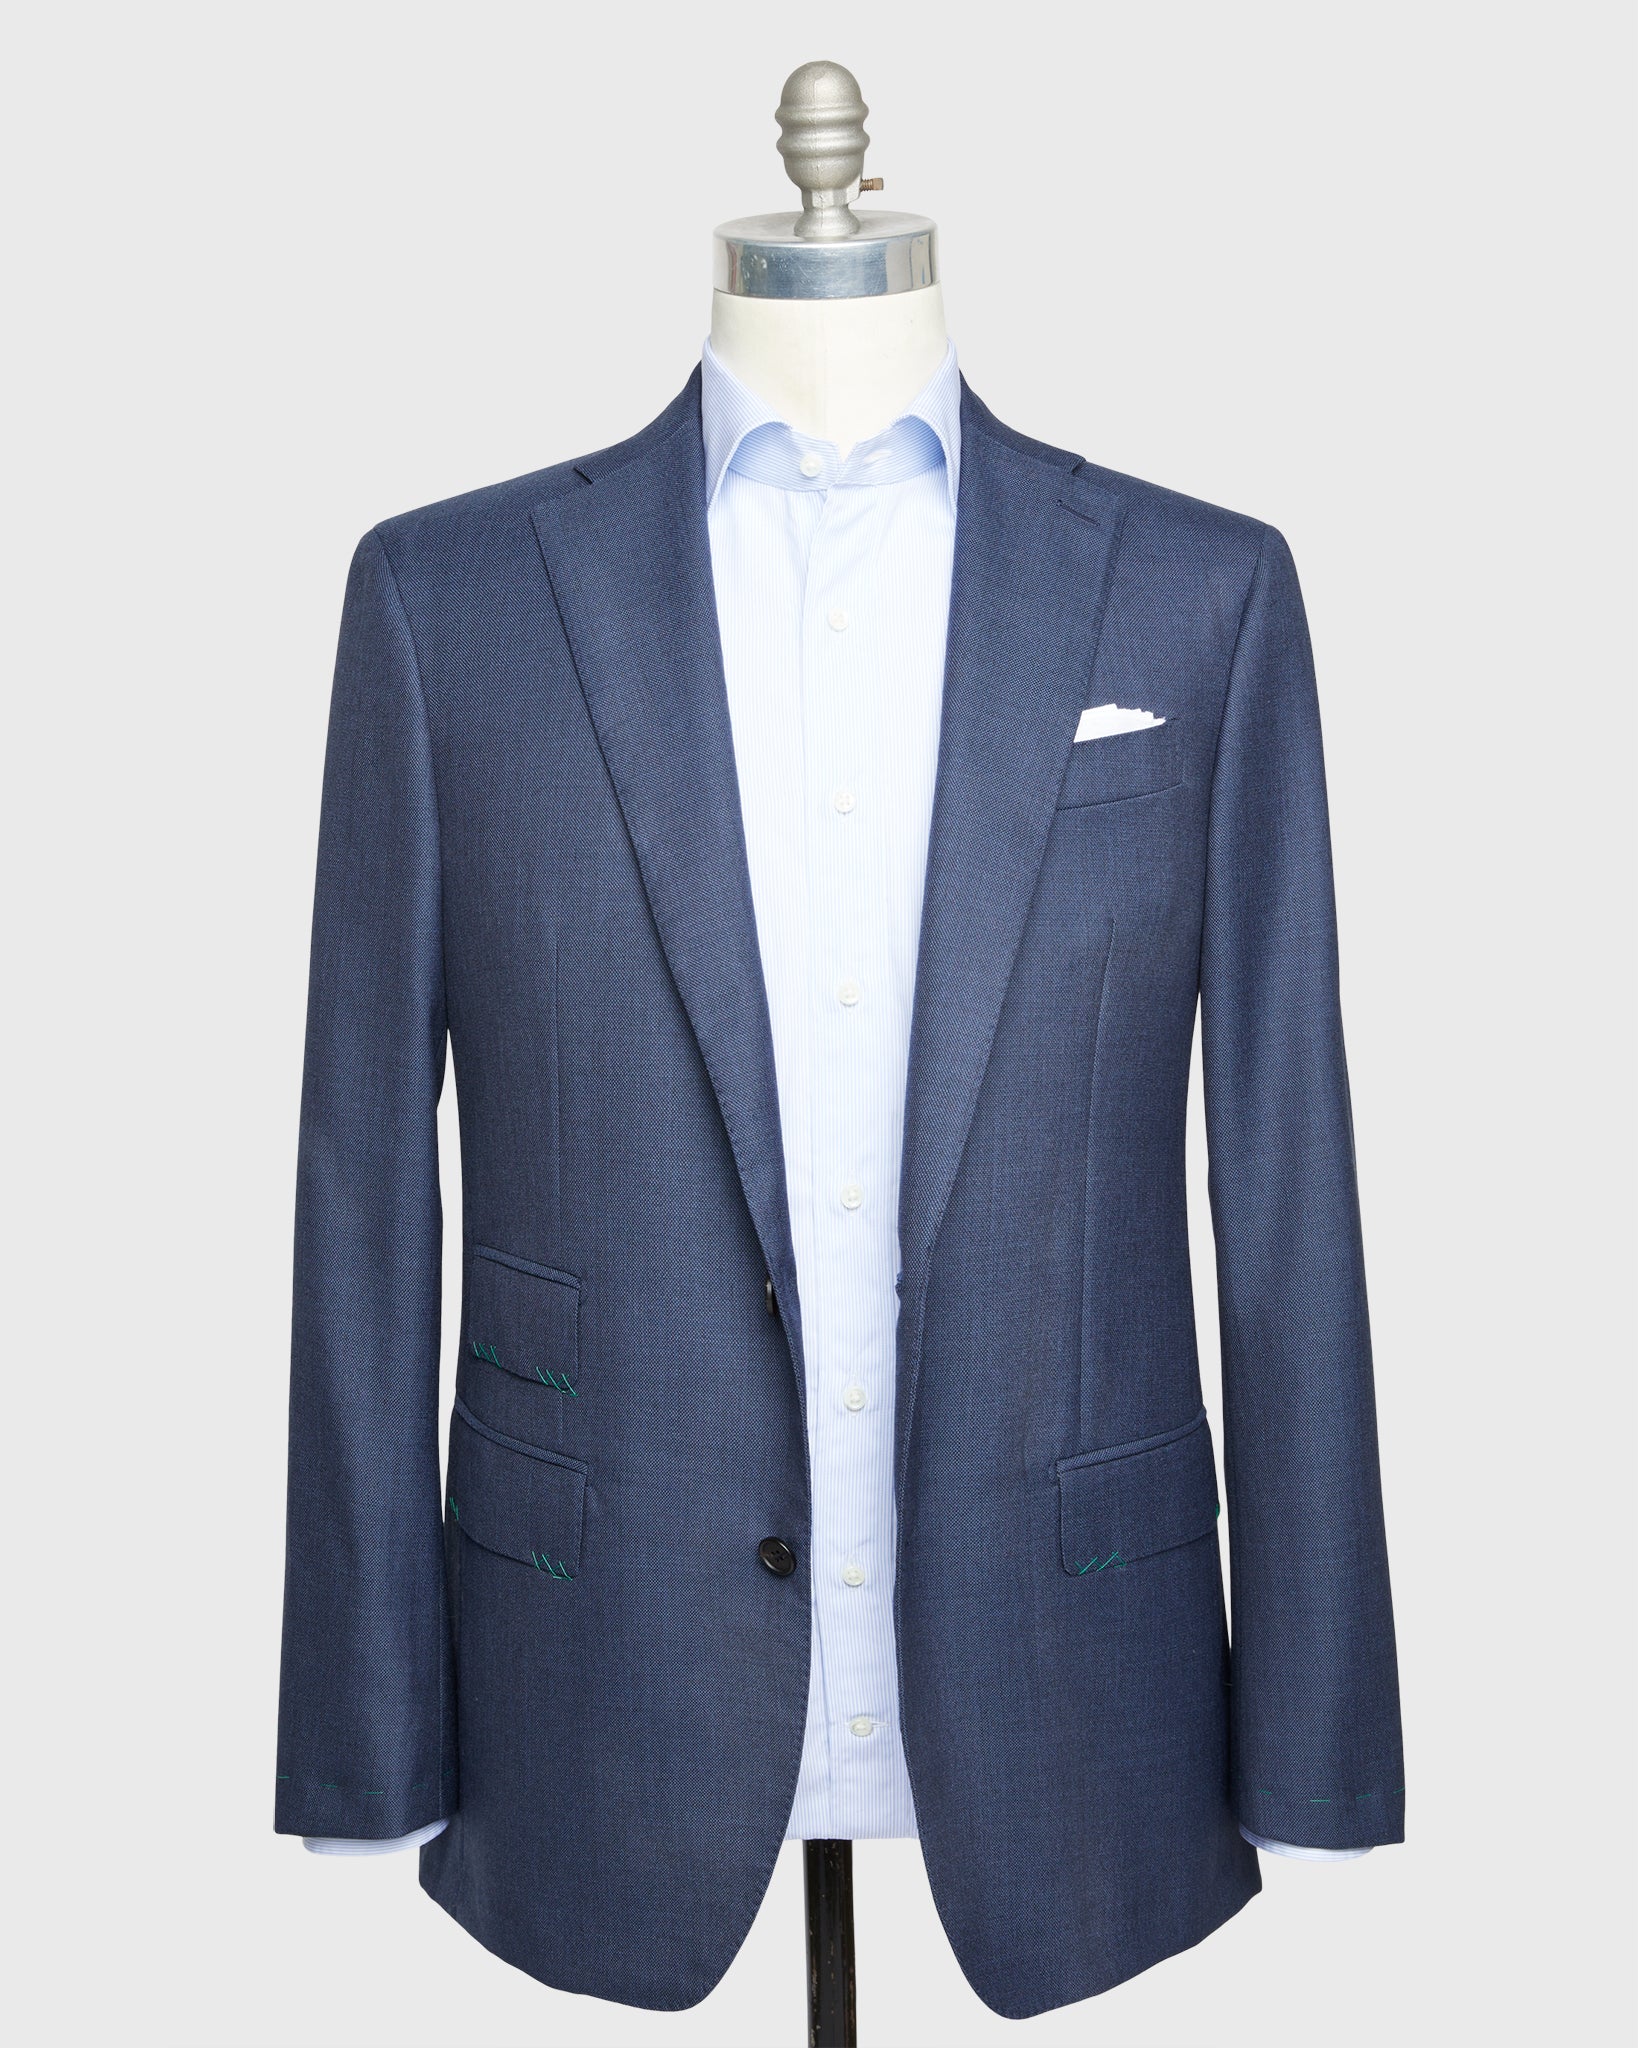 Kincaid No. 3 Suit in Blue Sharkskin